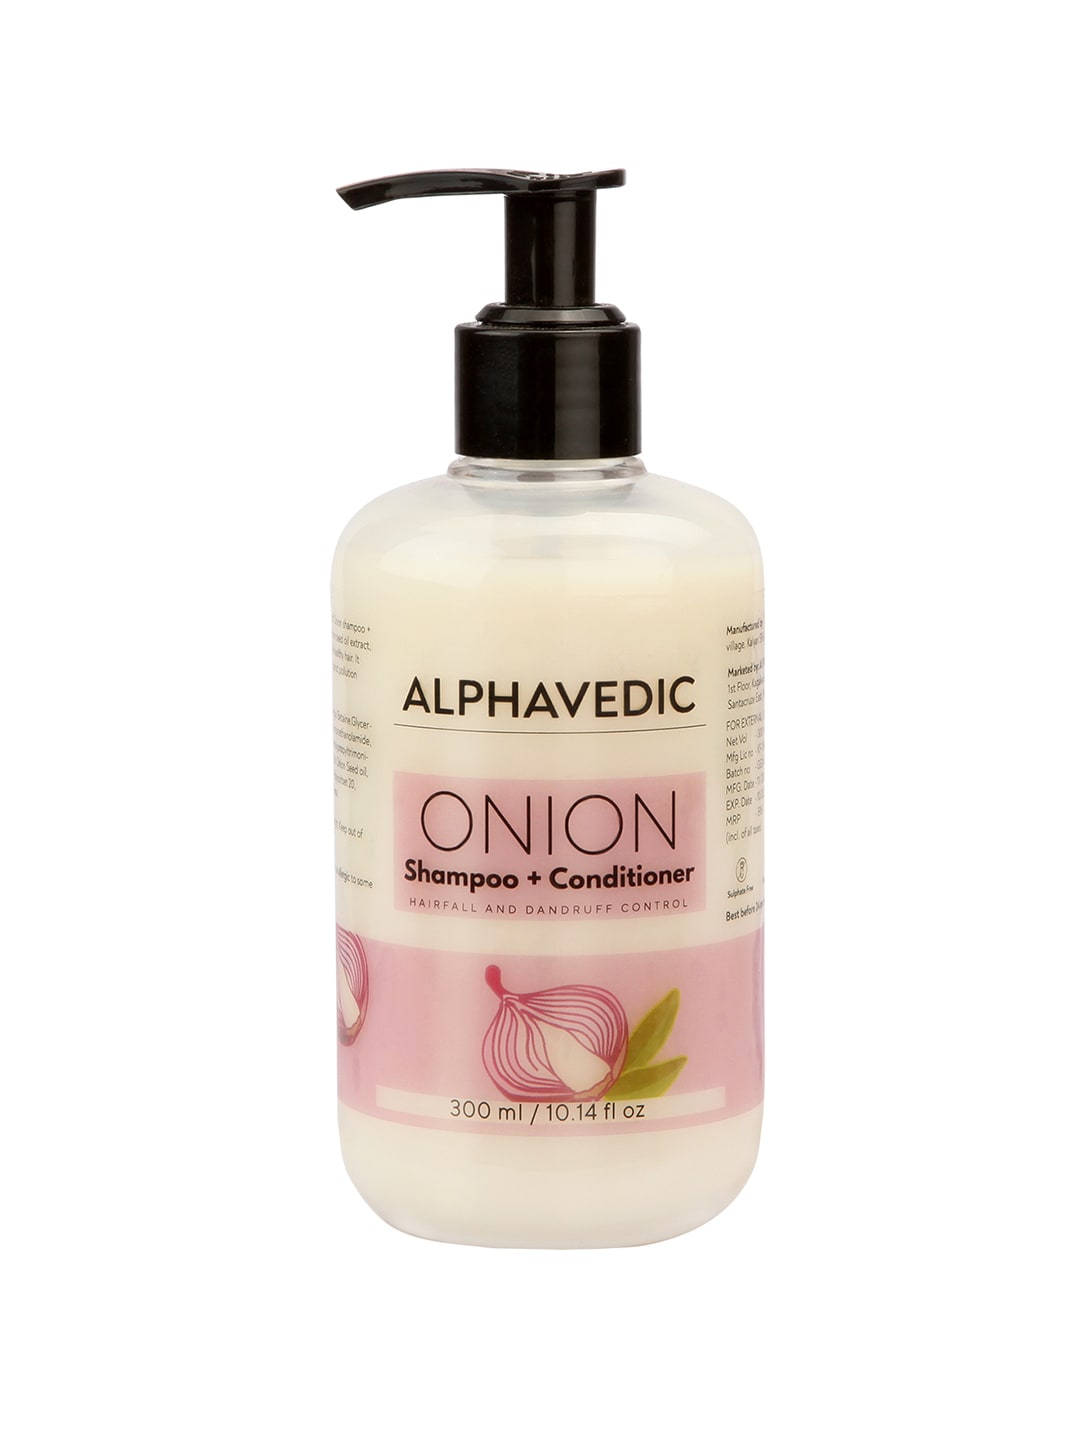 ALPHAVEDIC Onion Hair Shampoo plus Condtioner - 300 ml Price in India